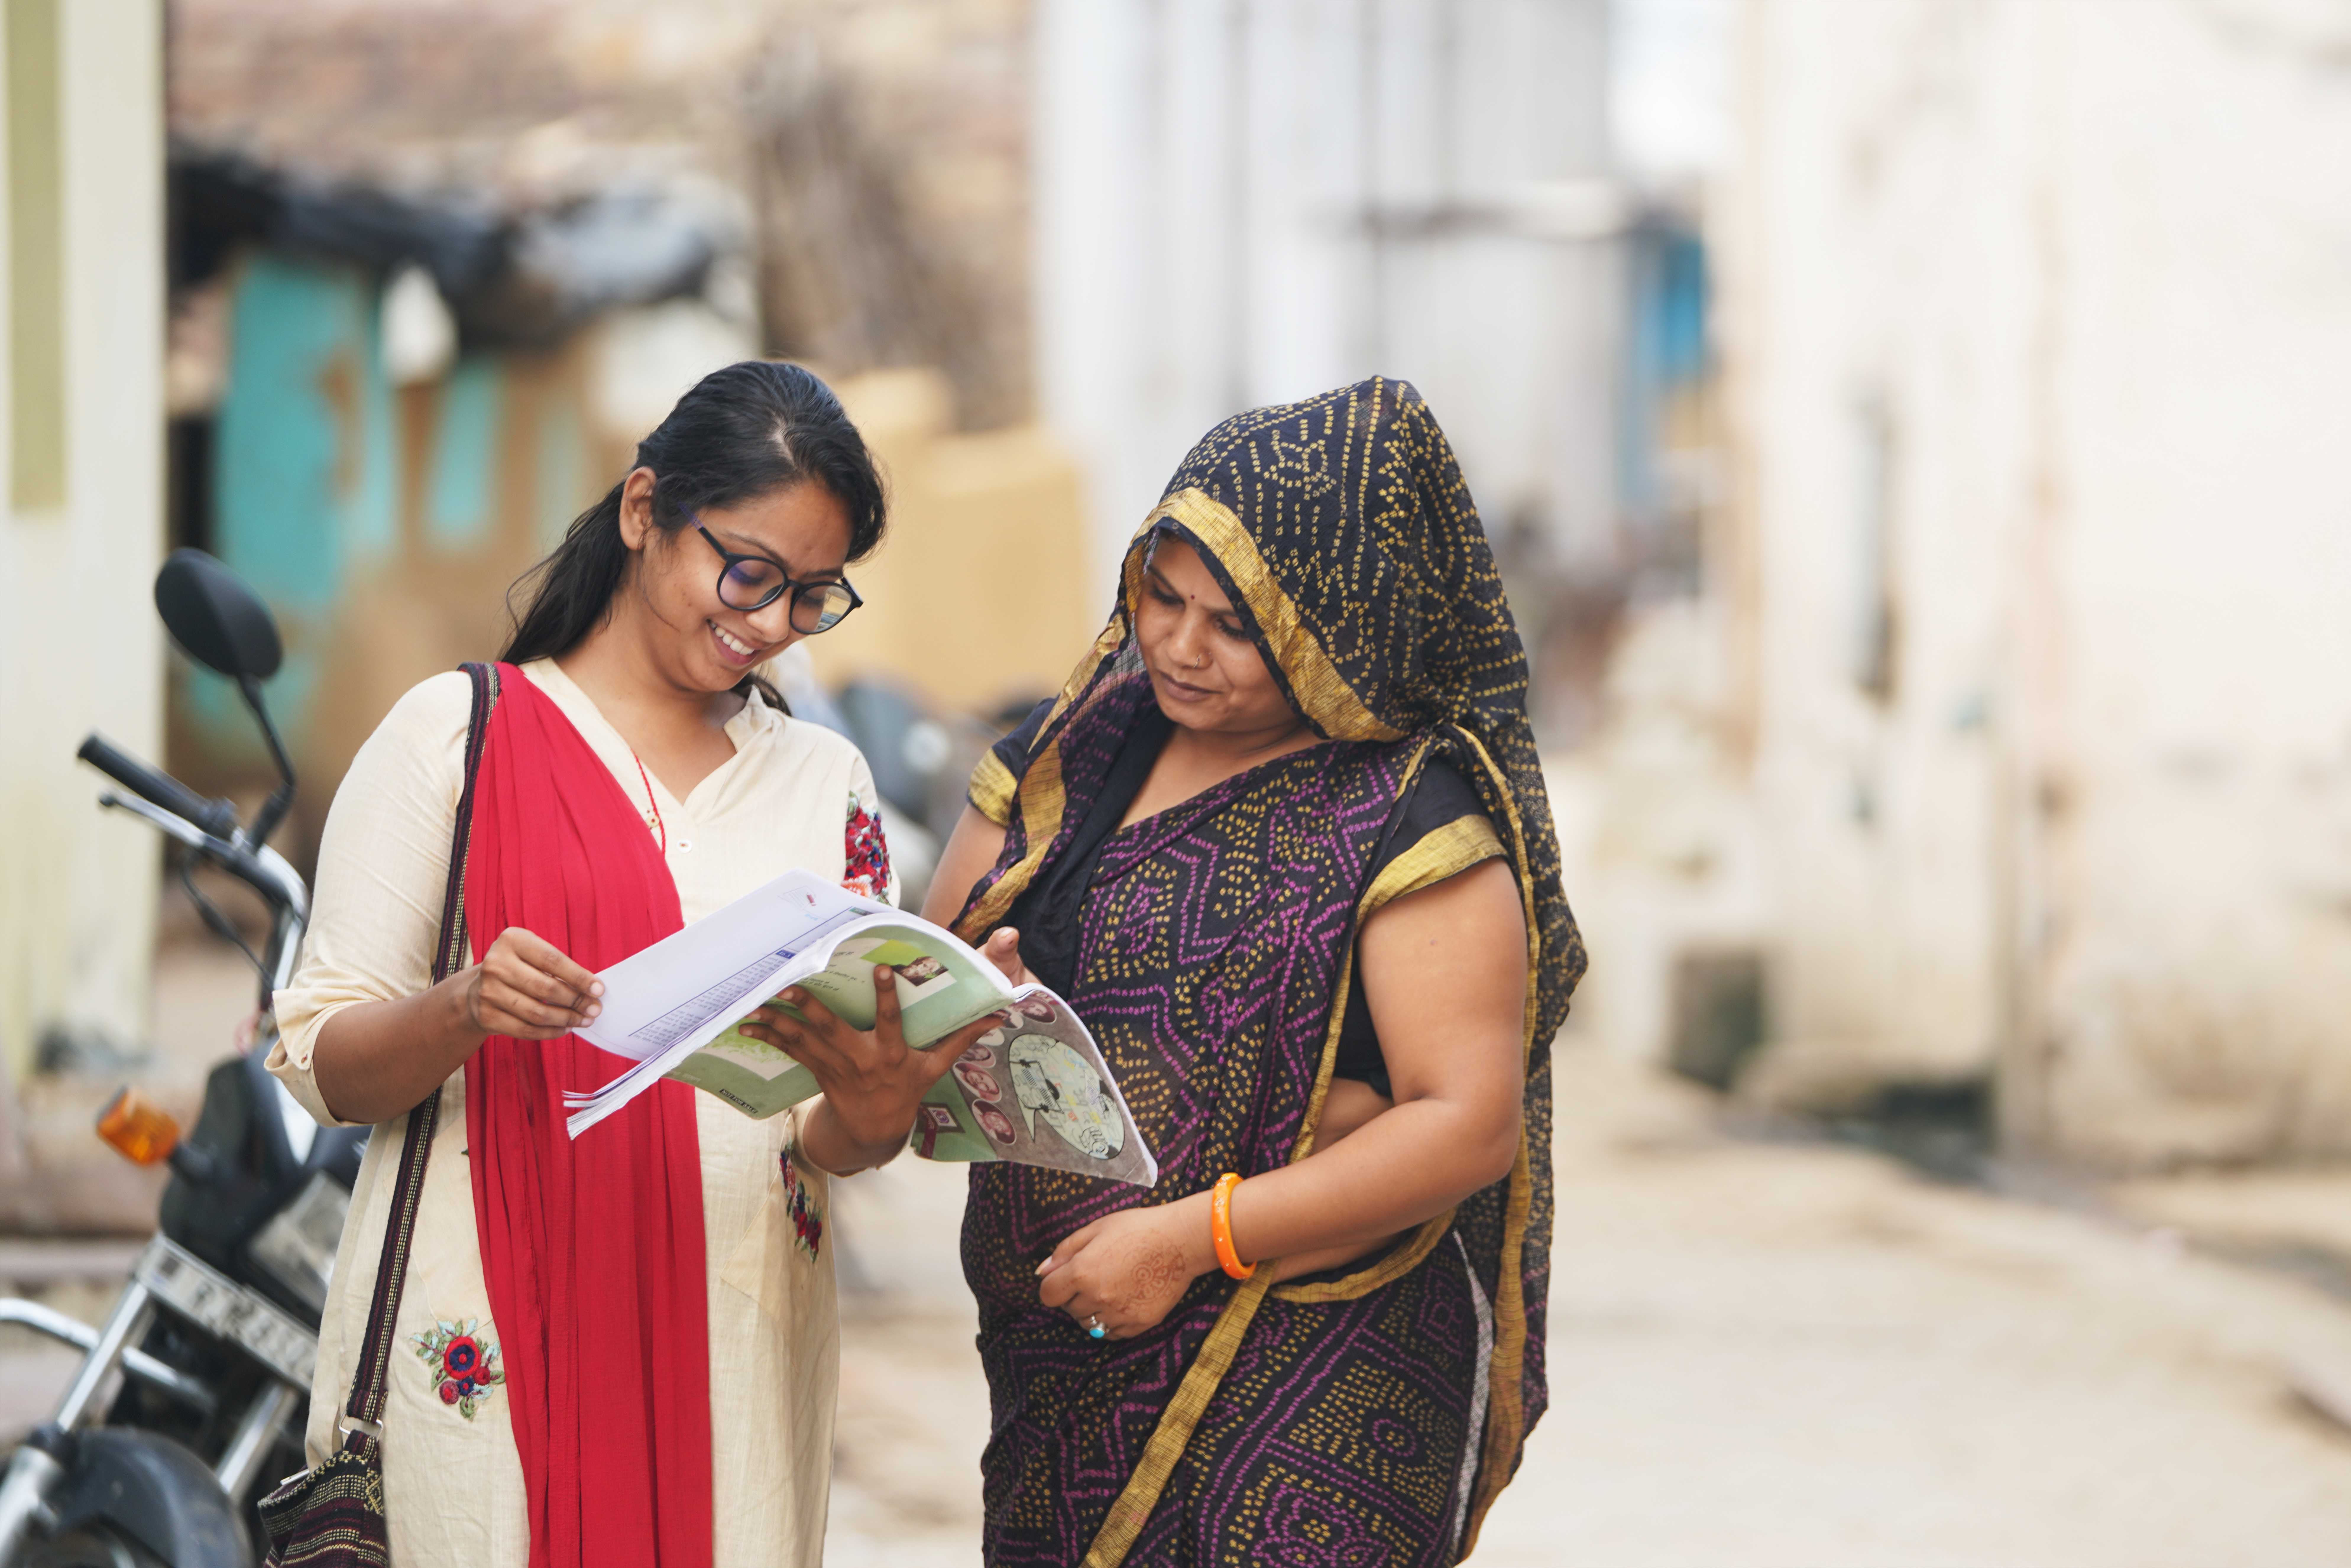 Image Courtesy: Second Chance Education (SCE) Programme, UN Women India